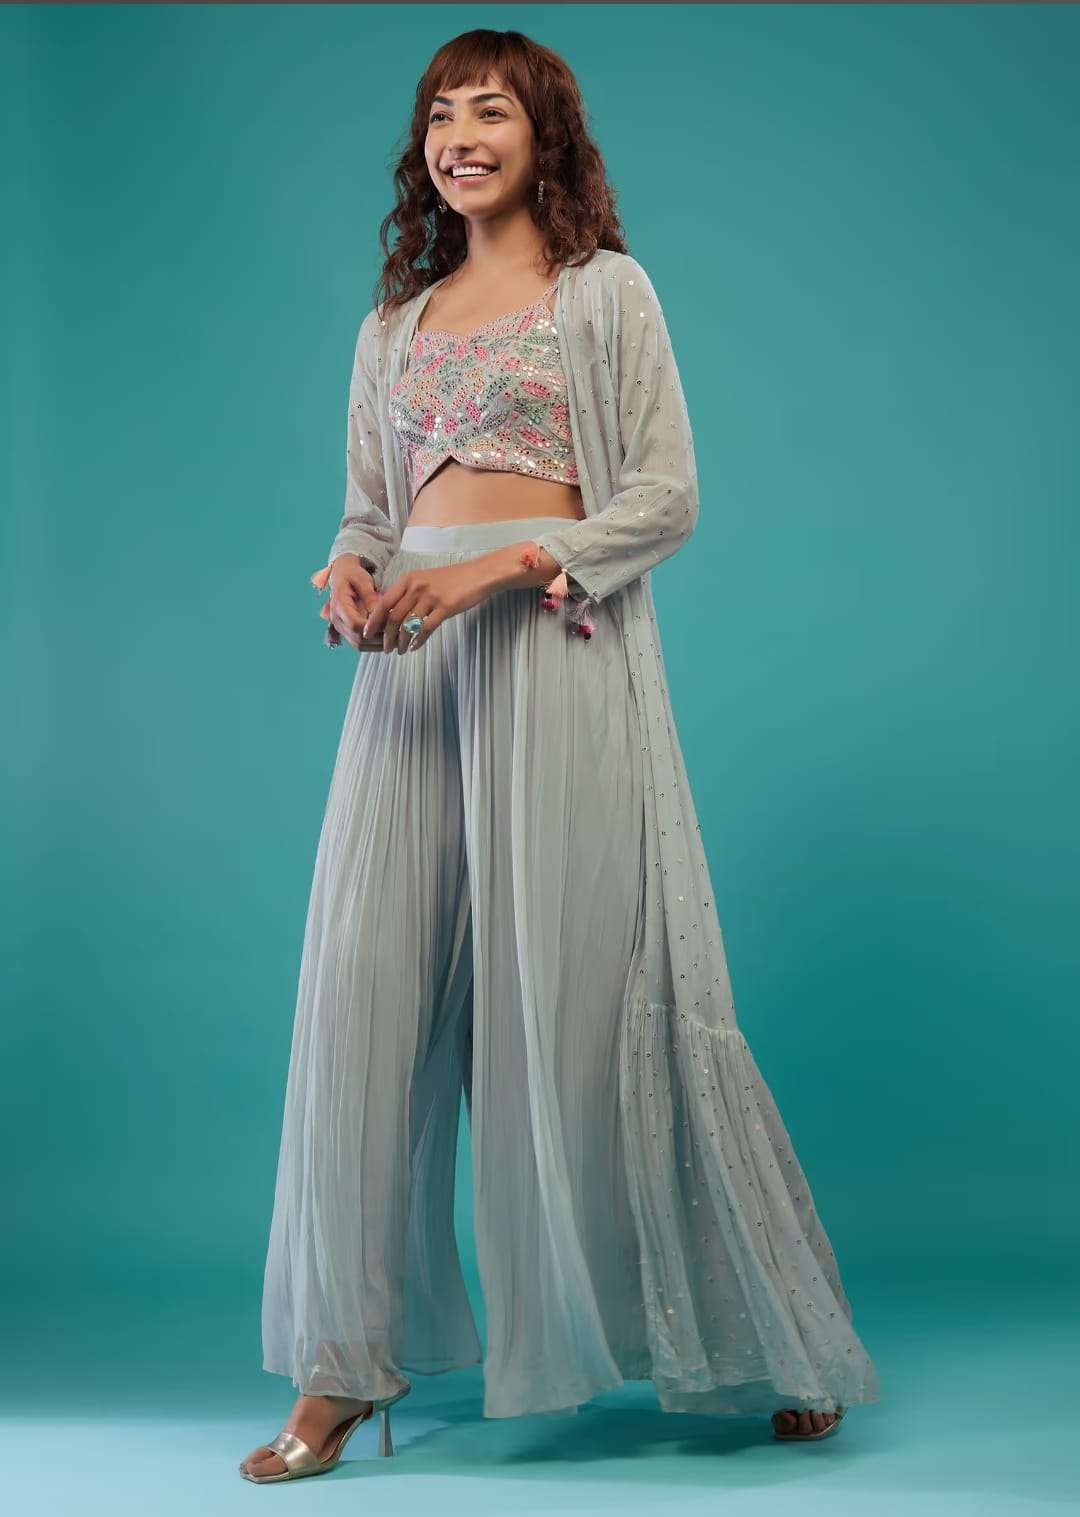 Fanciest Women's Lace Wedding Dresses Long Sleeve India | Ubuy